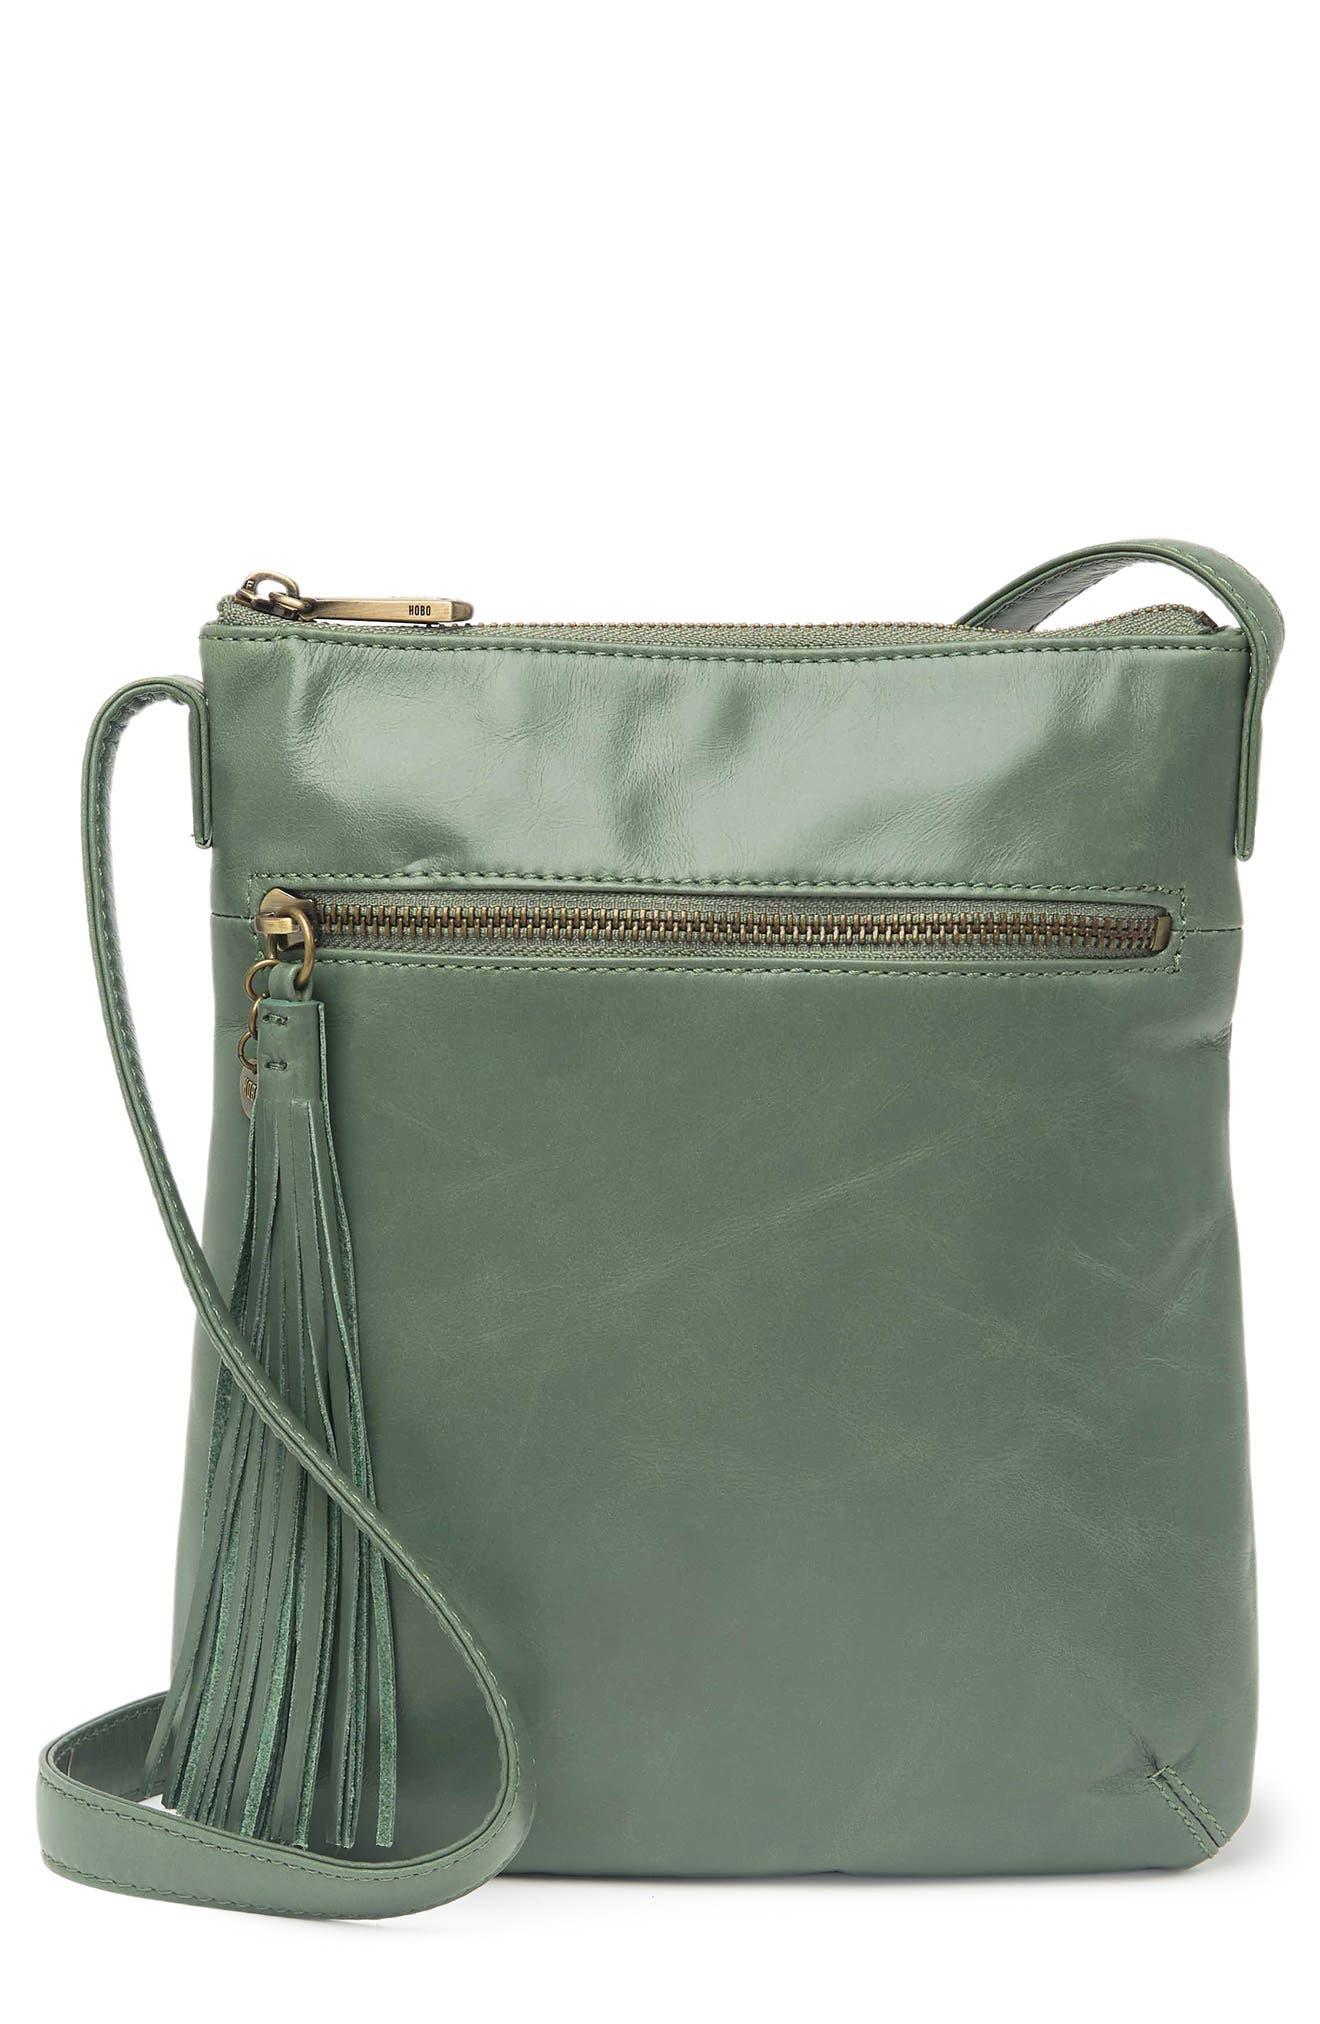 Leather Hobo Handbag – Le Donne Leather